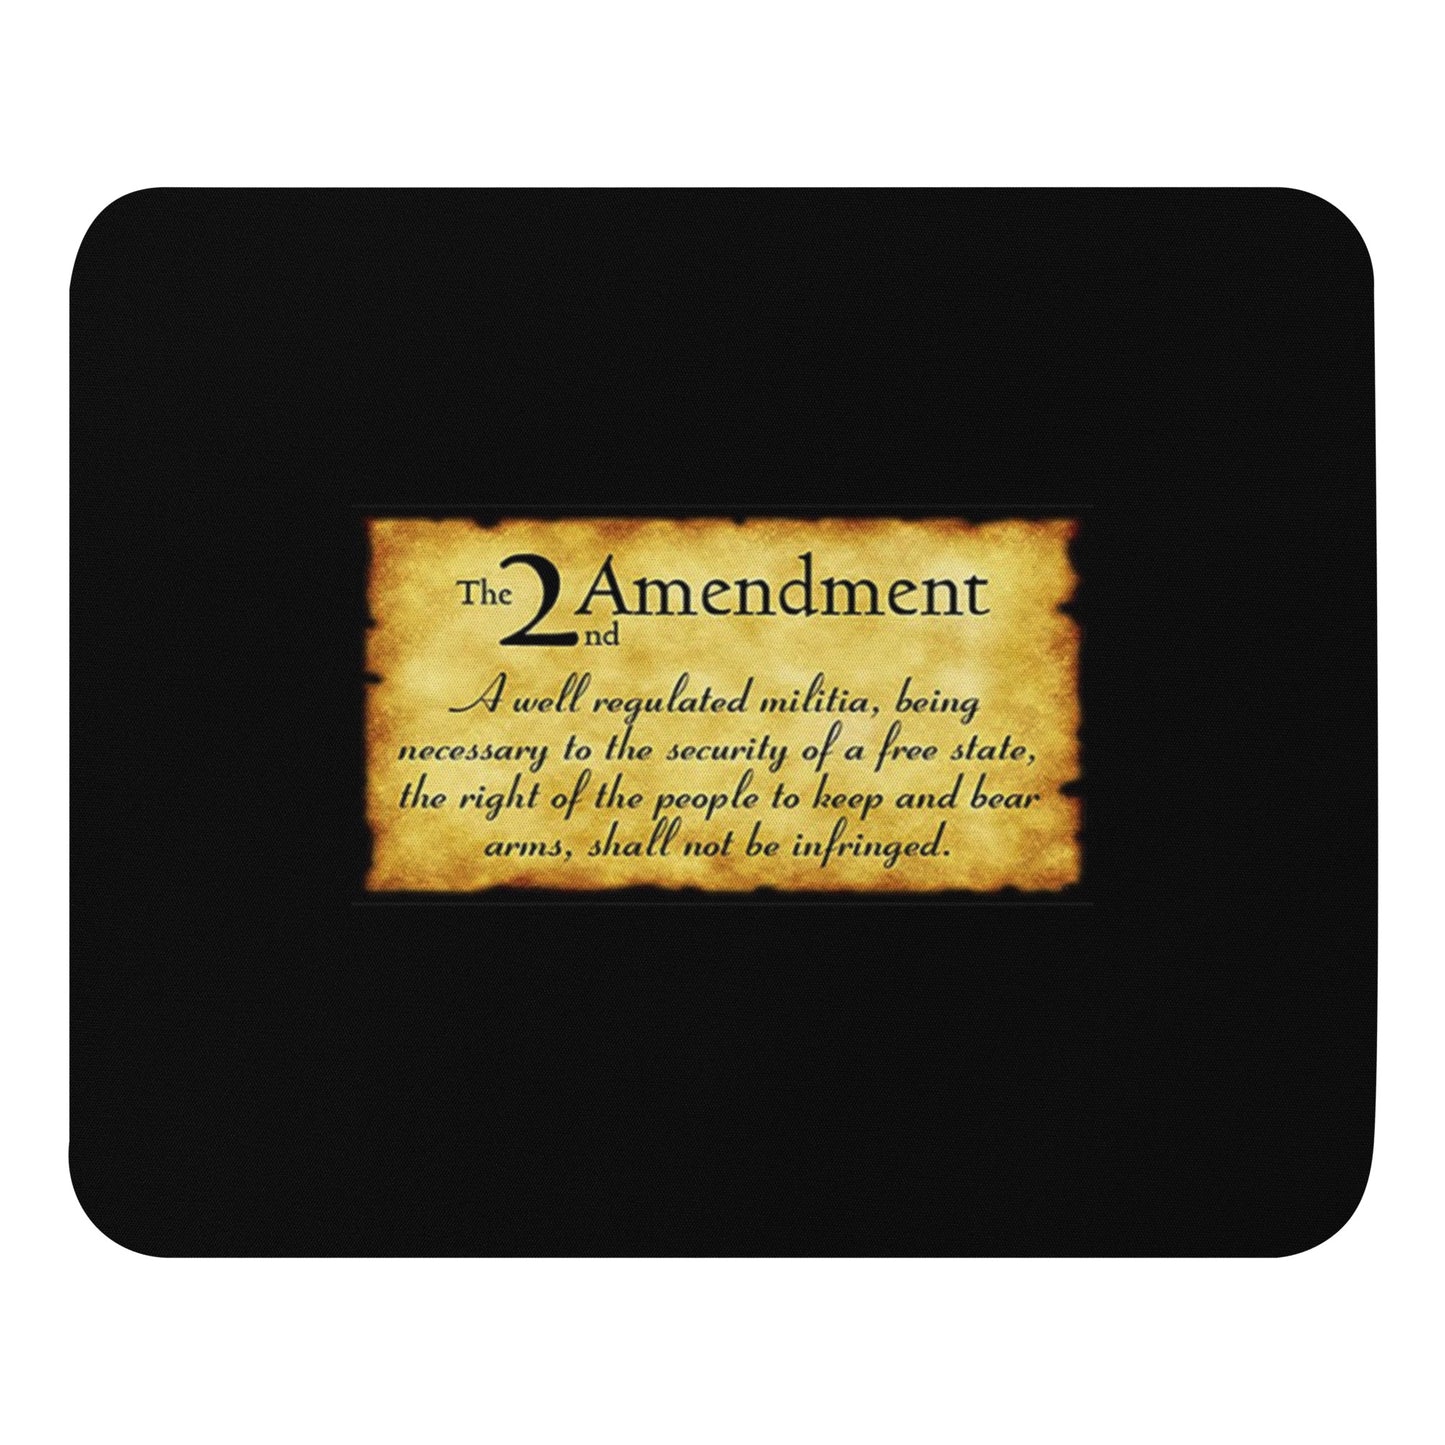 2nd Amendment Mouse pad